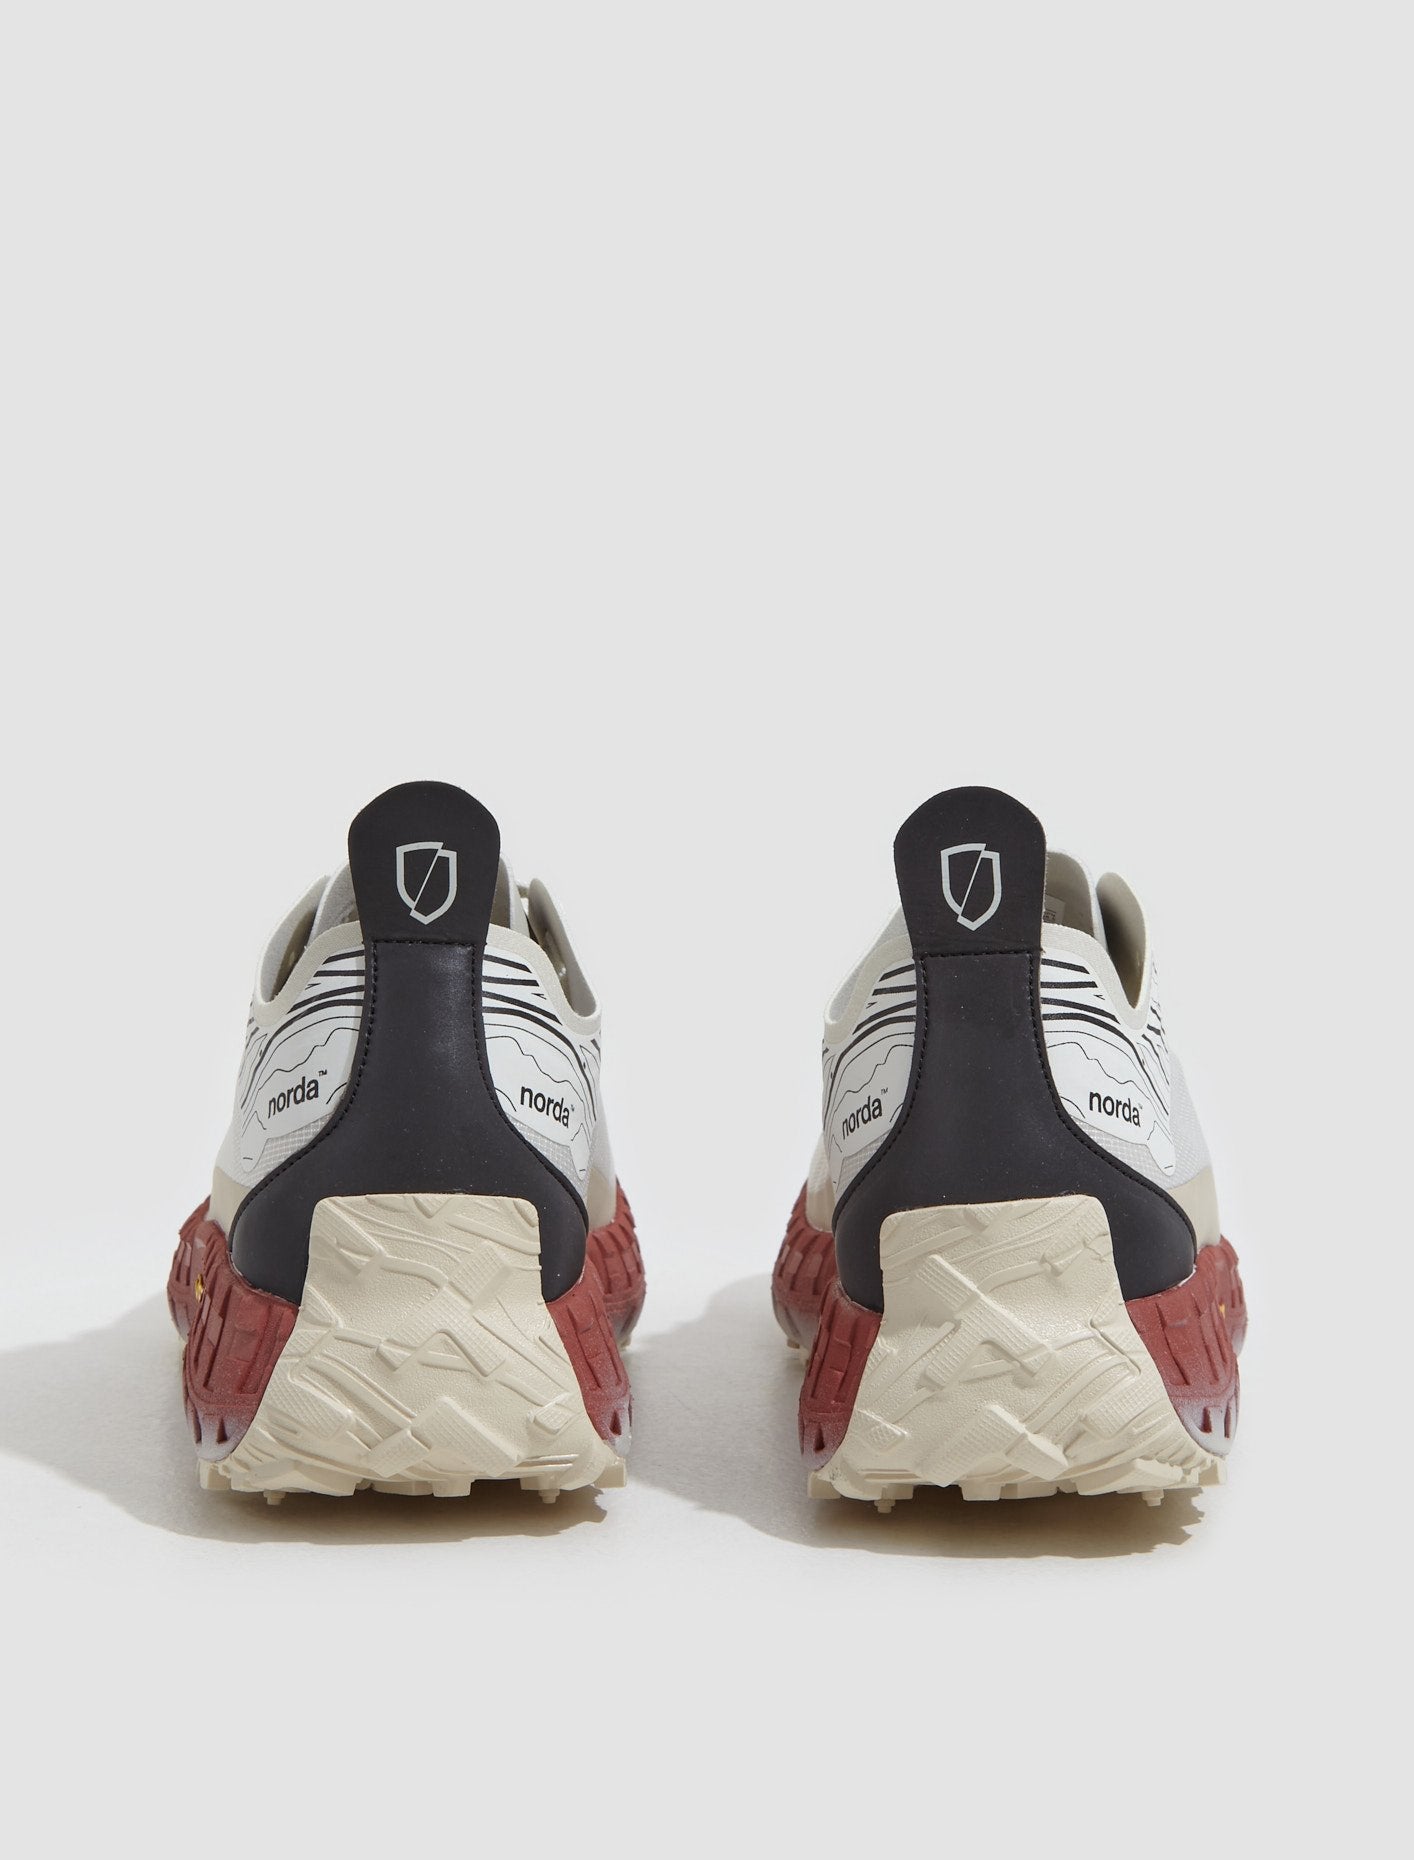 The 001 M LTD Edition Sneaker in Mars